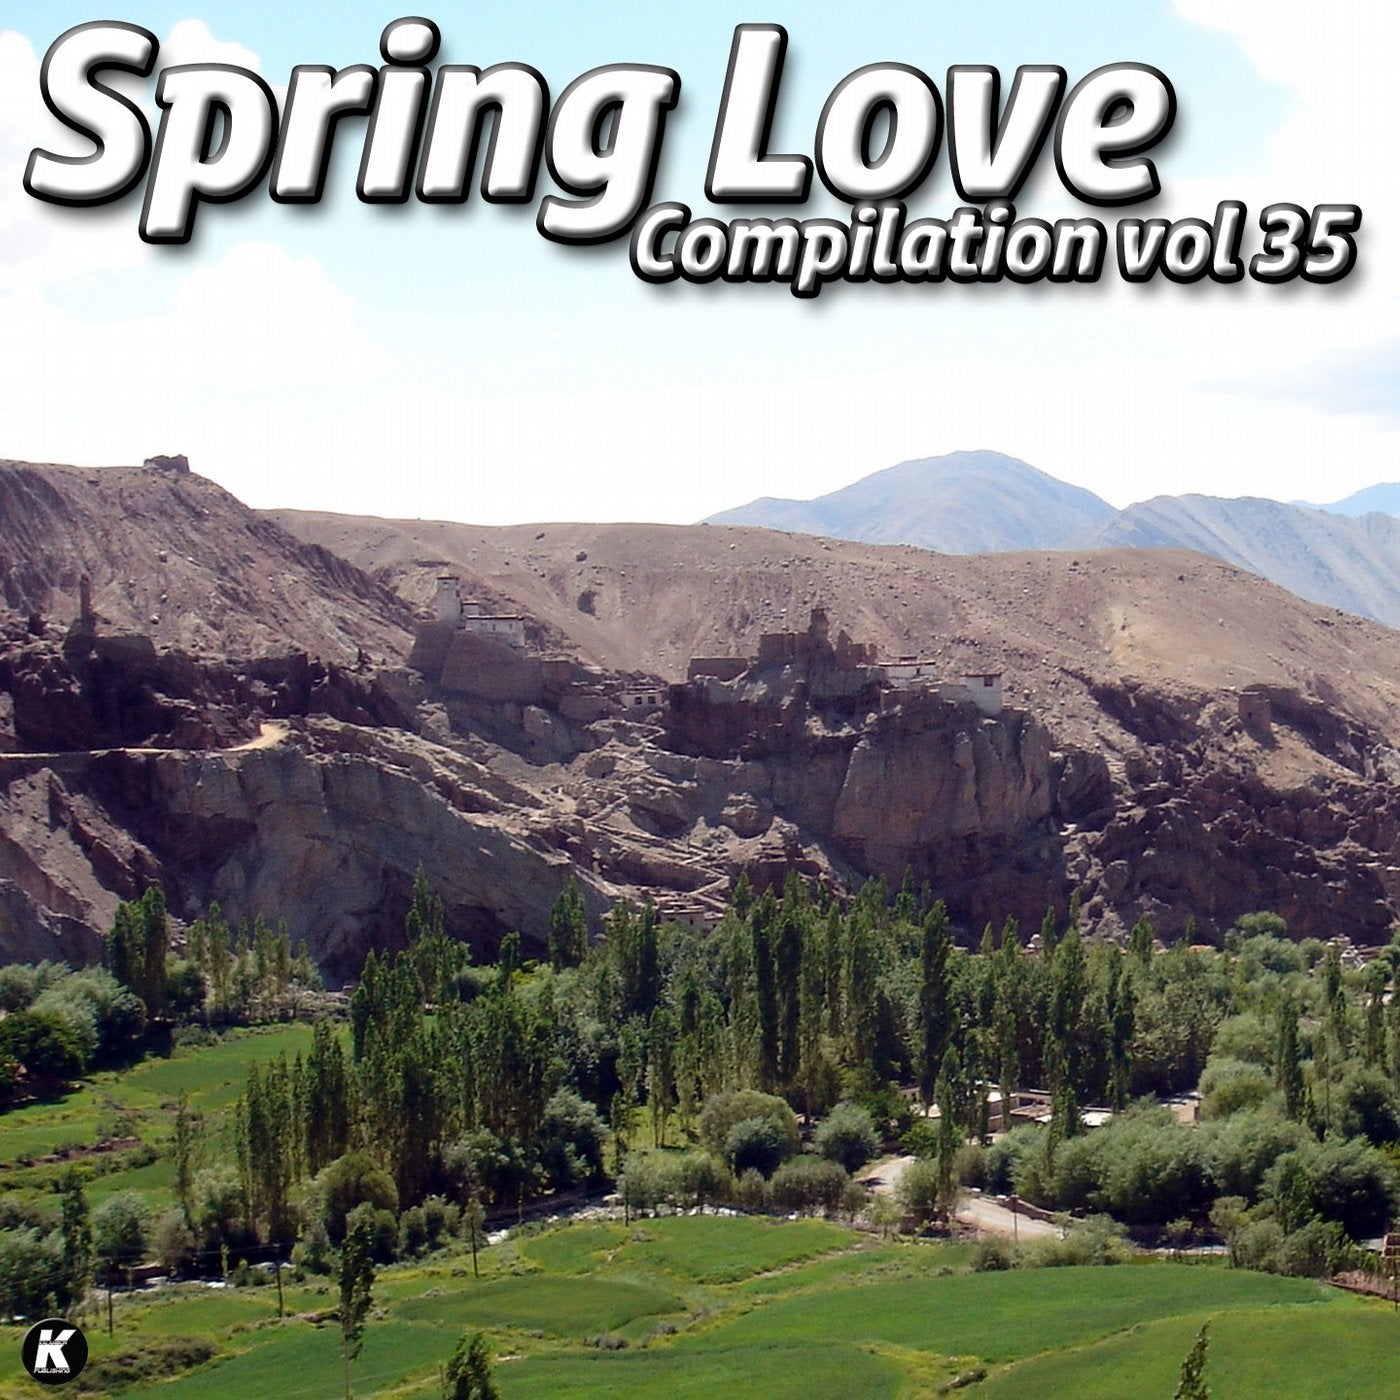 SPRING LOVE COMPILATION VOL 35